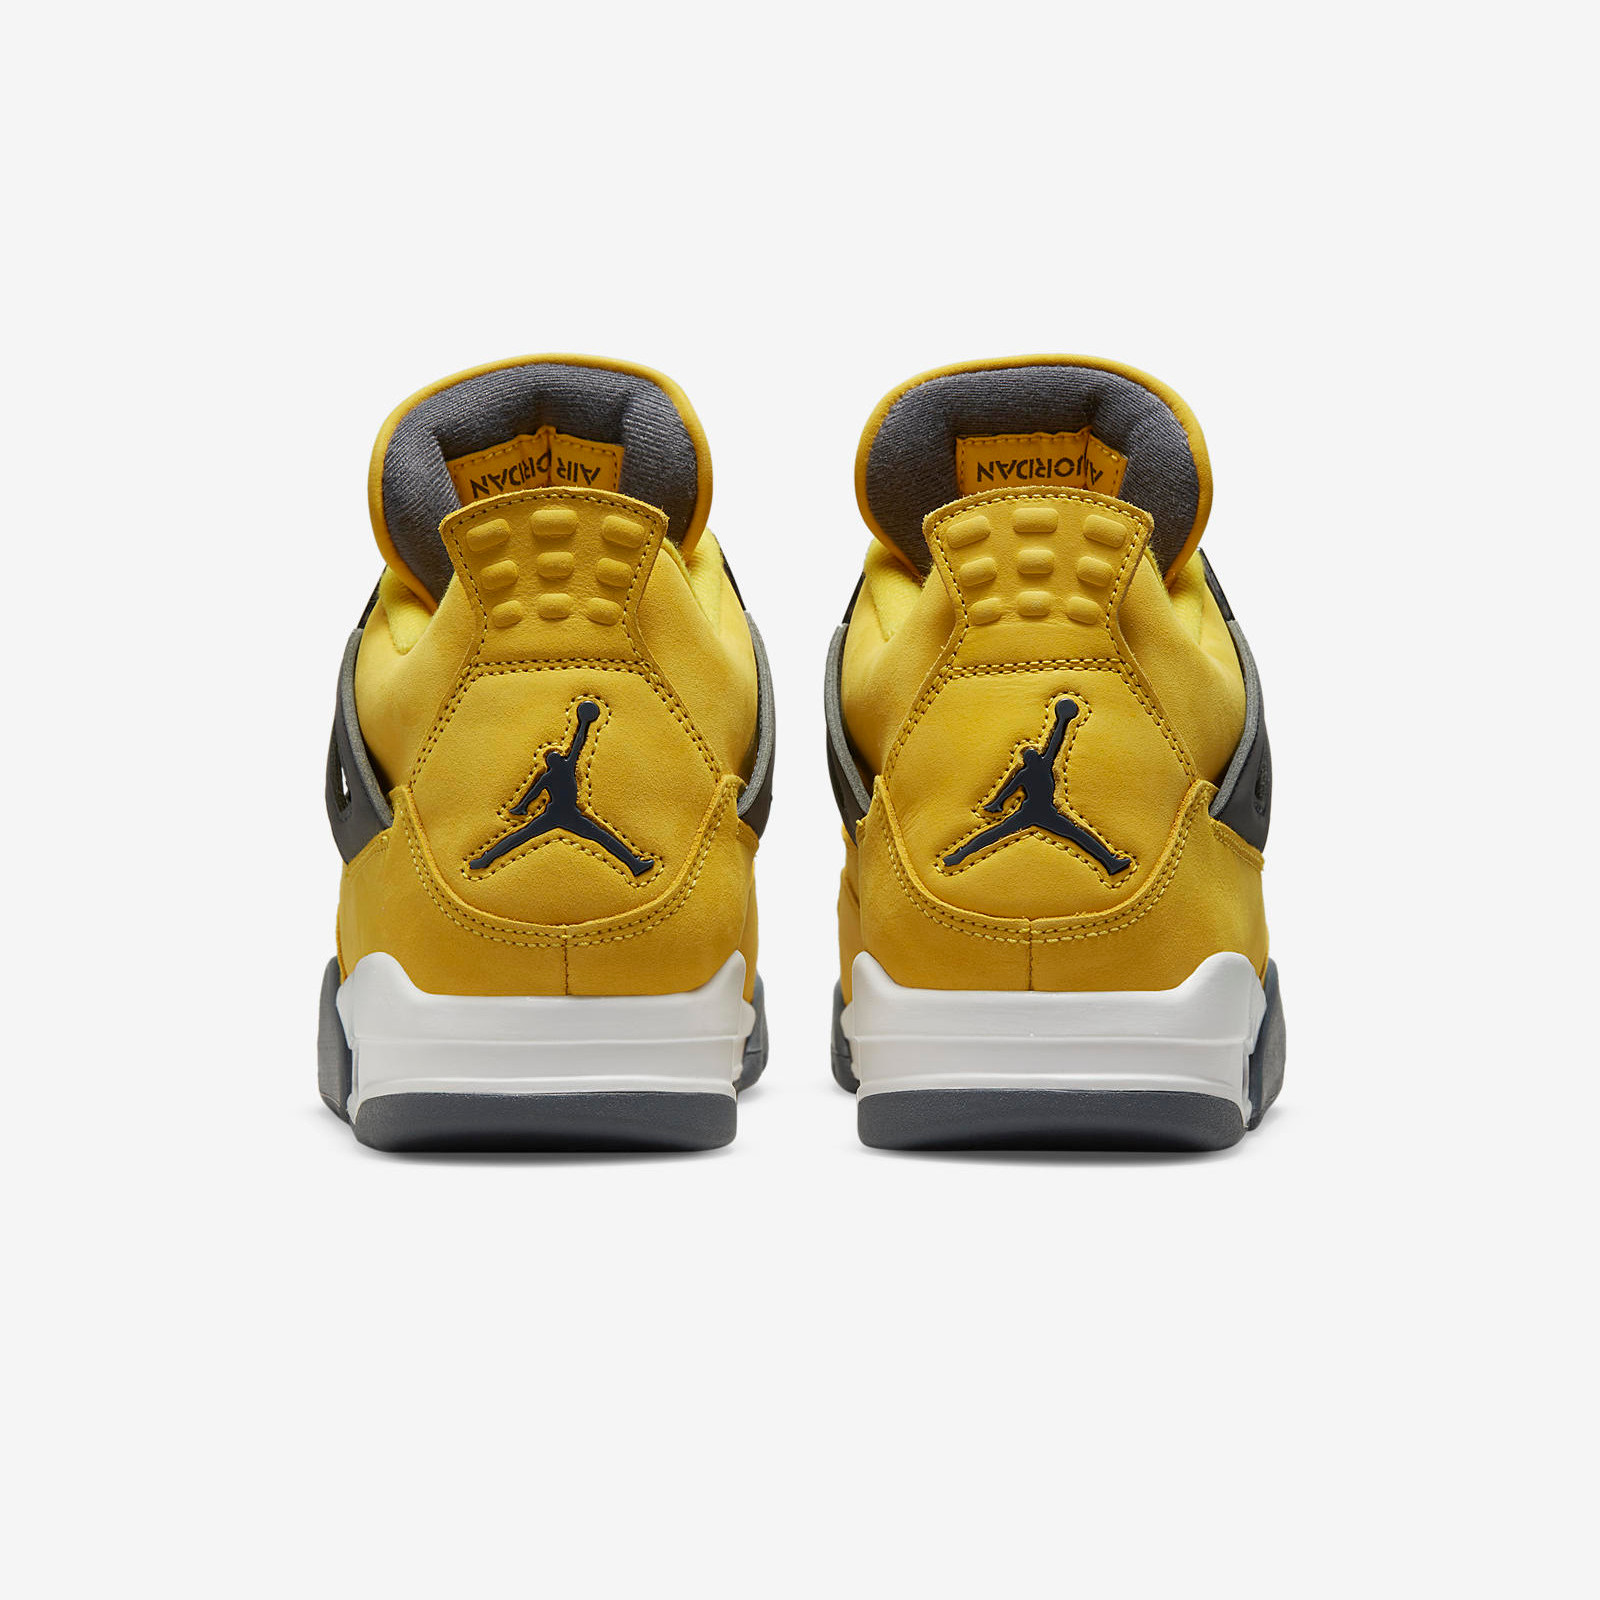 Air Jordan 4 Retro
« Tour Yellow »